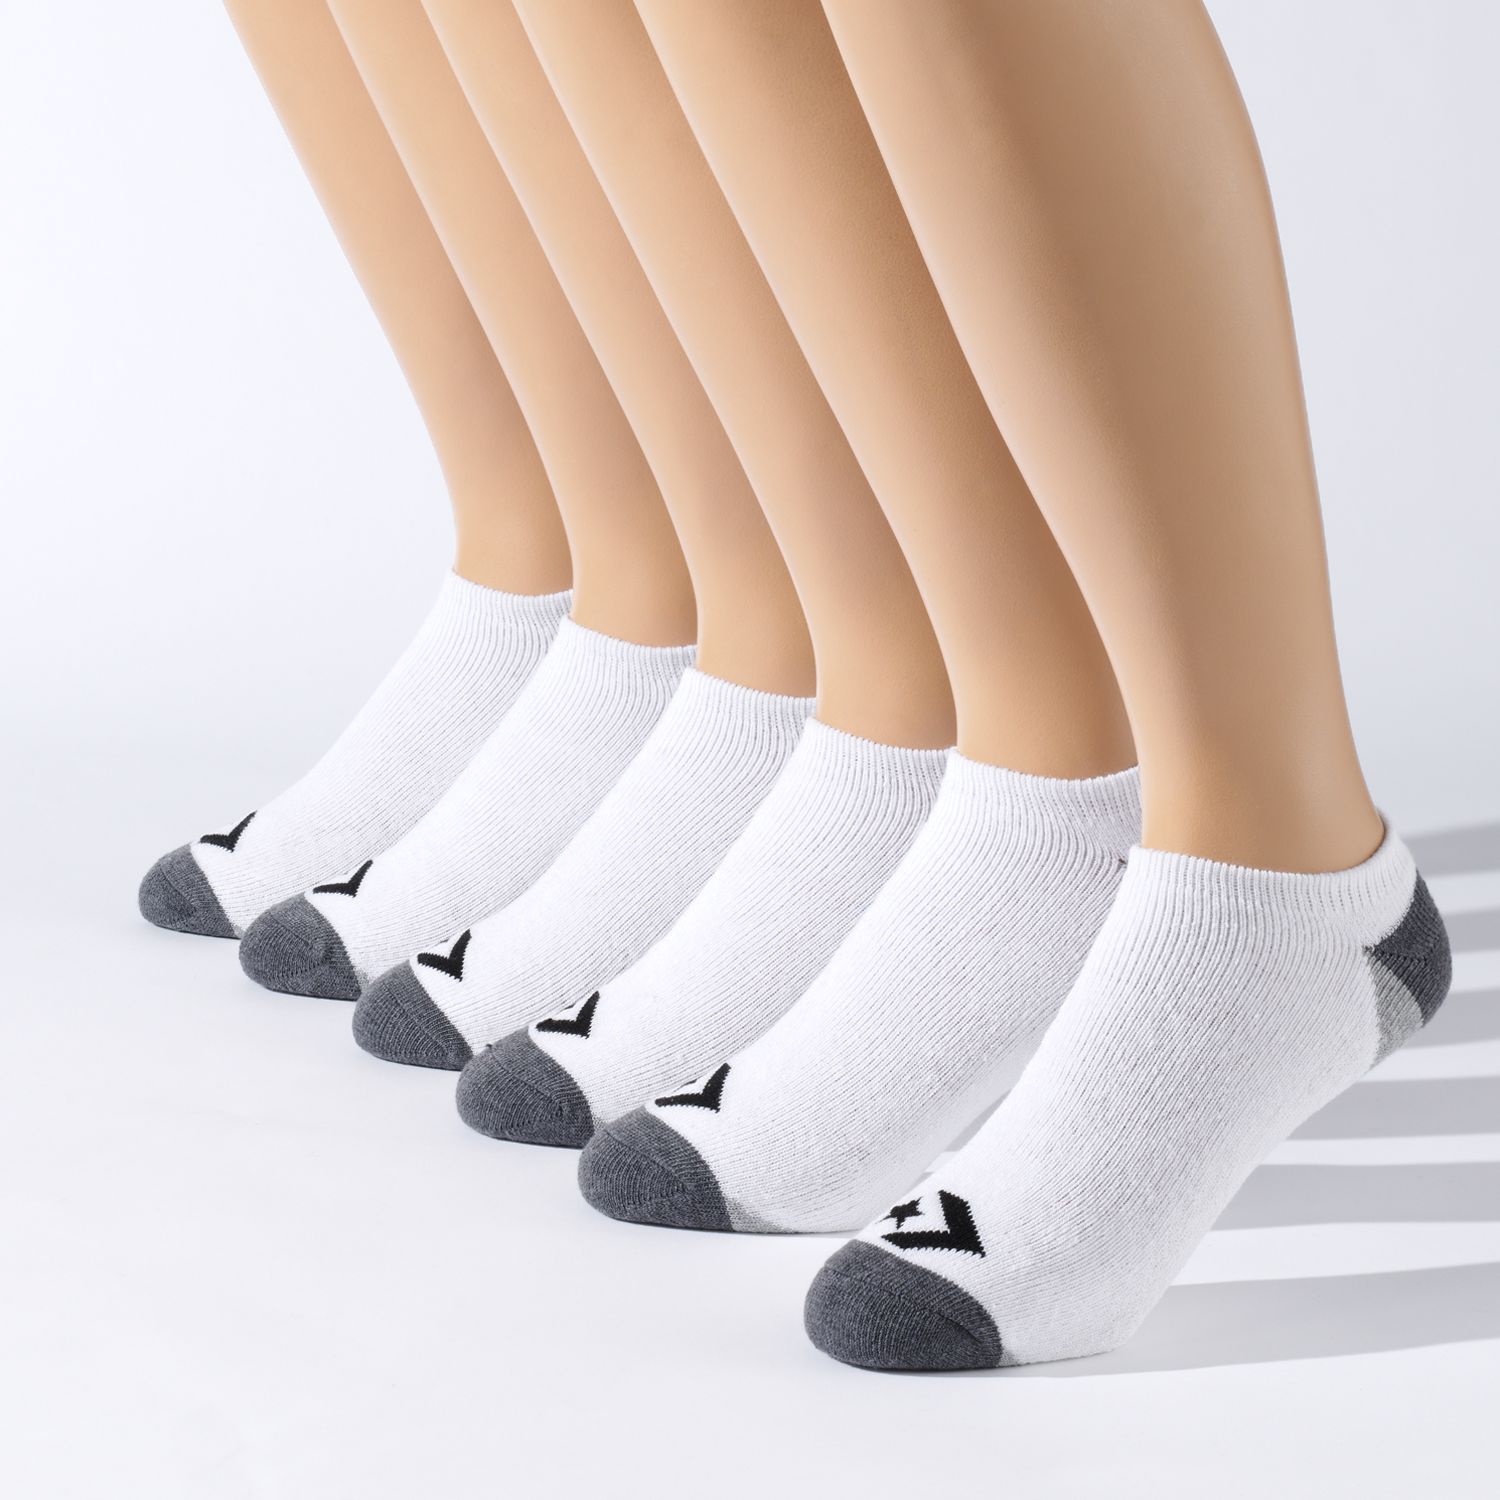 converse ankle socks